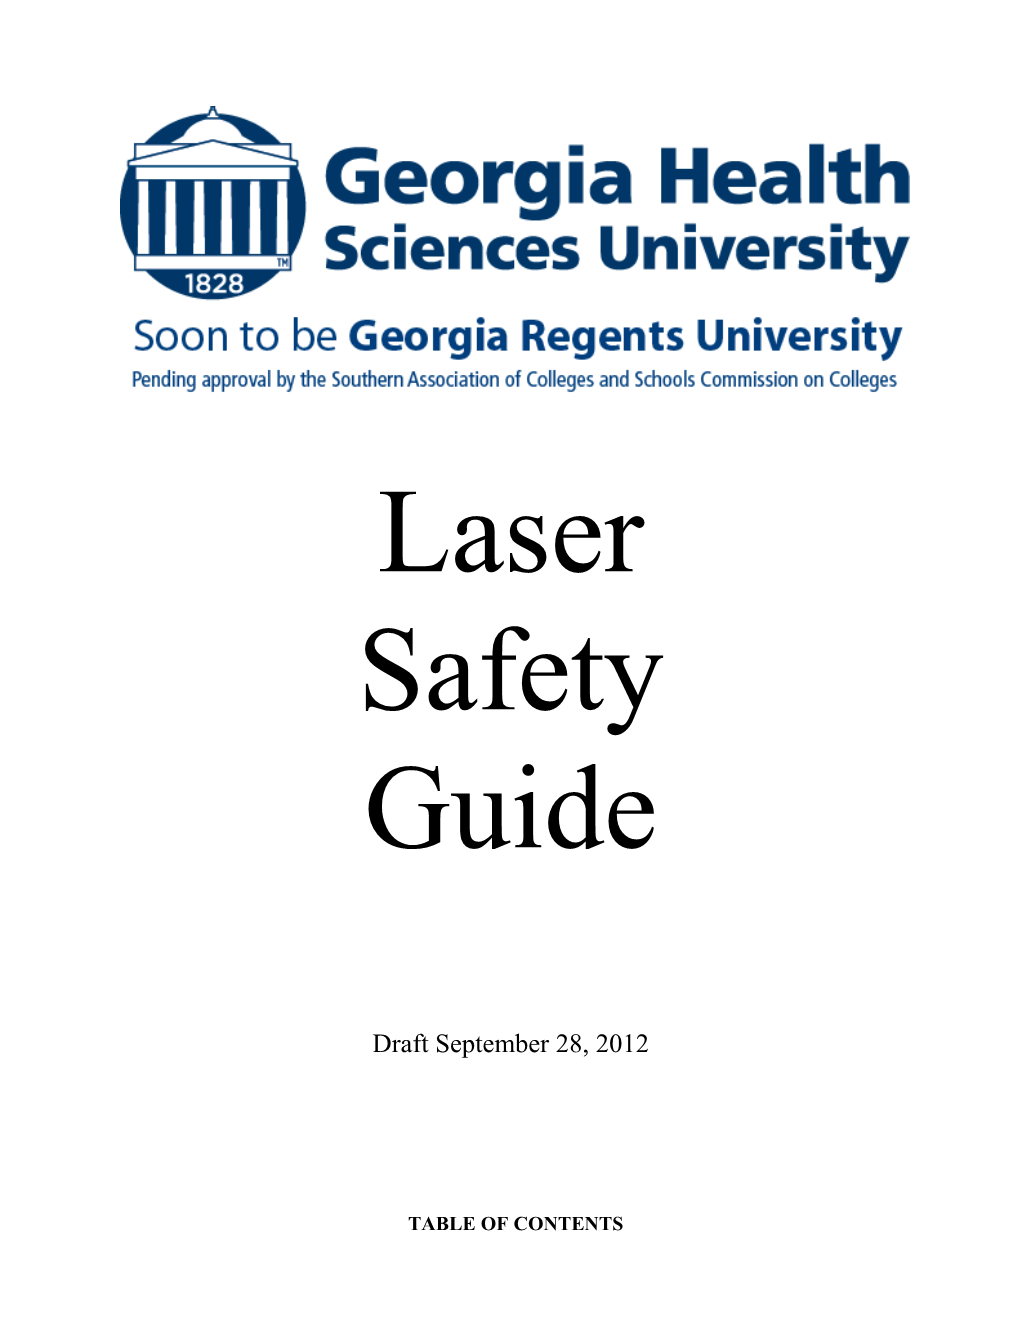 Laser Safety Guide